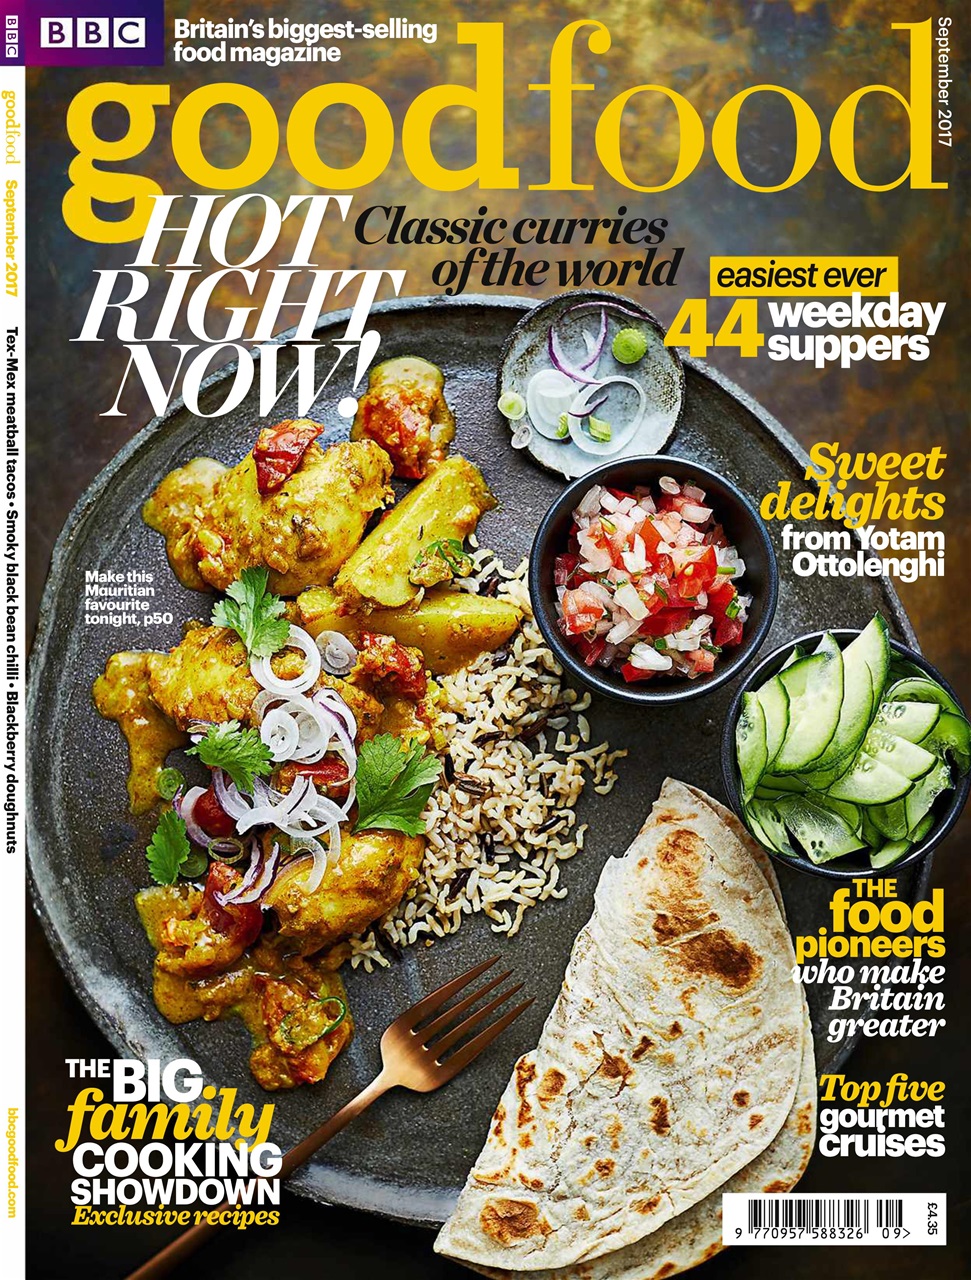 BBC Good Food Magazine - September 2017 Subscriptions ...